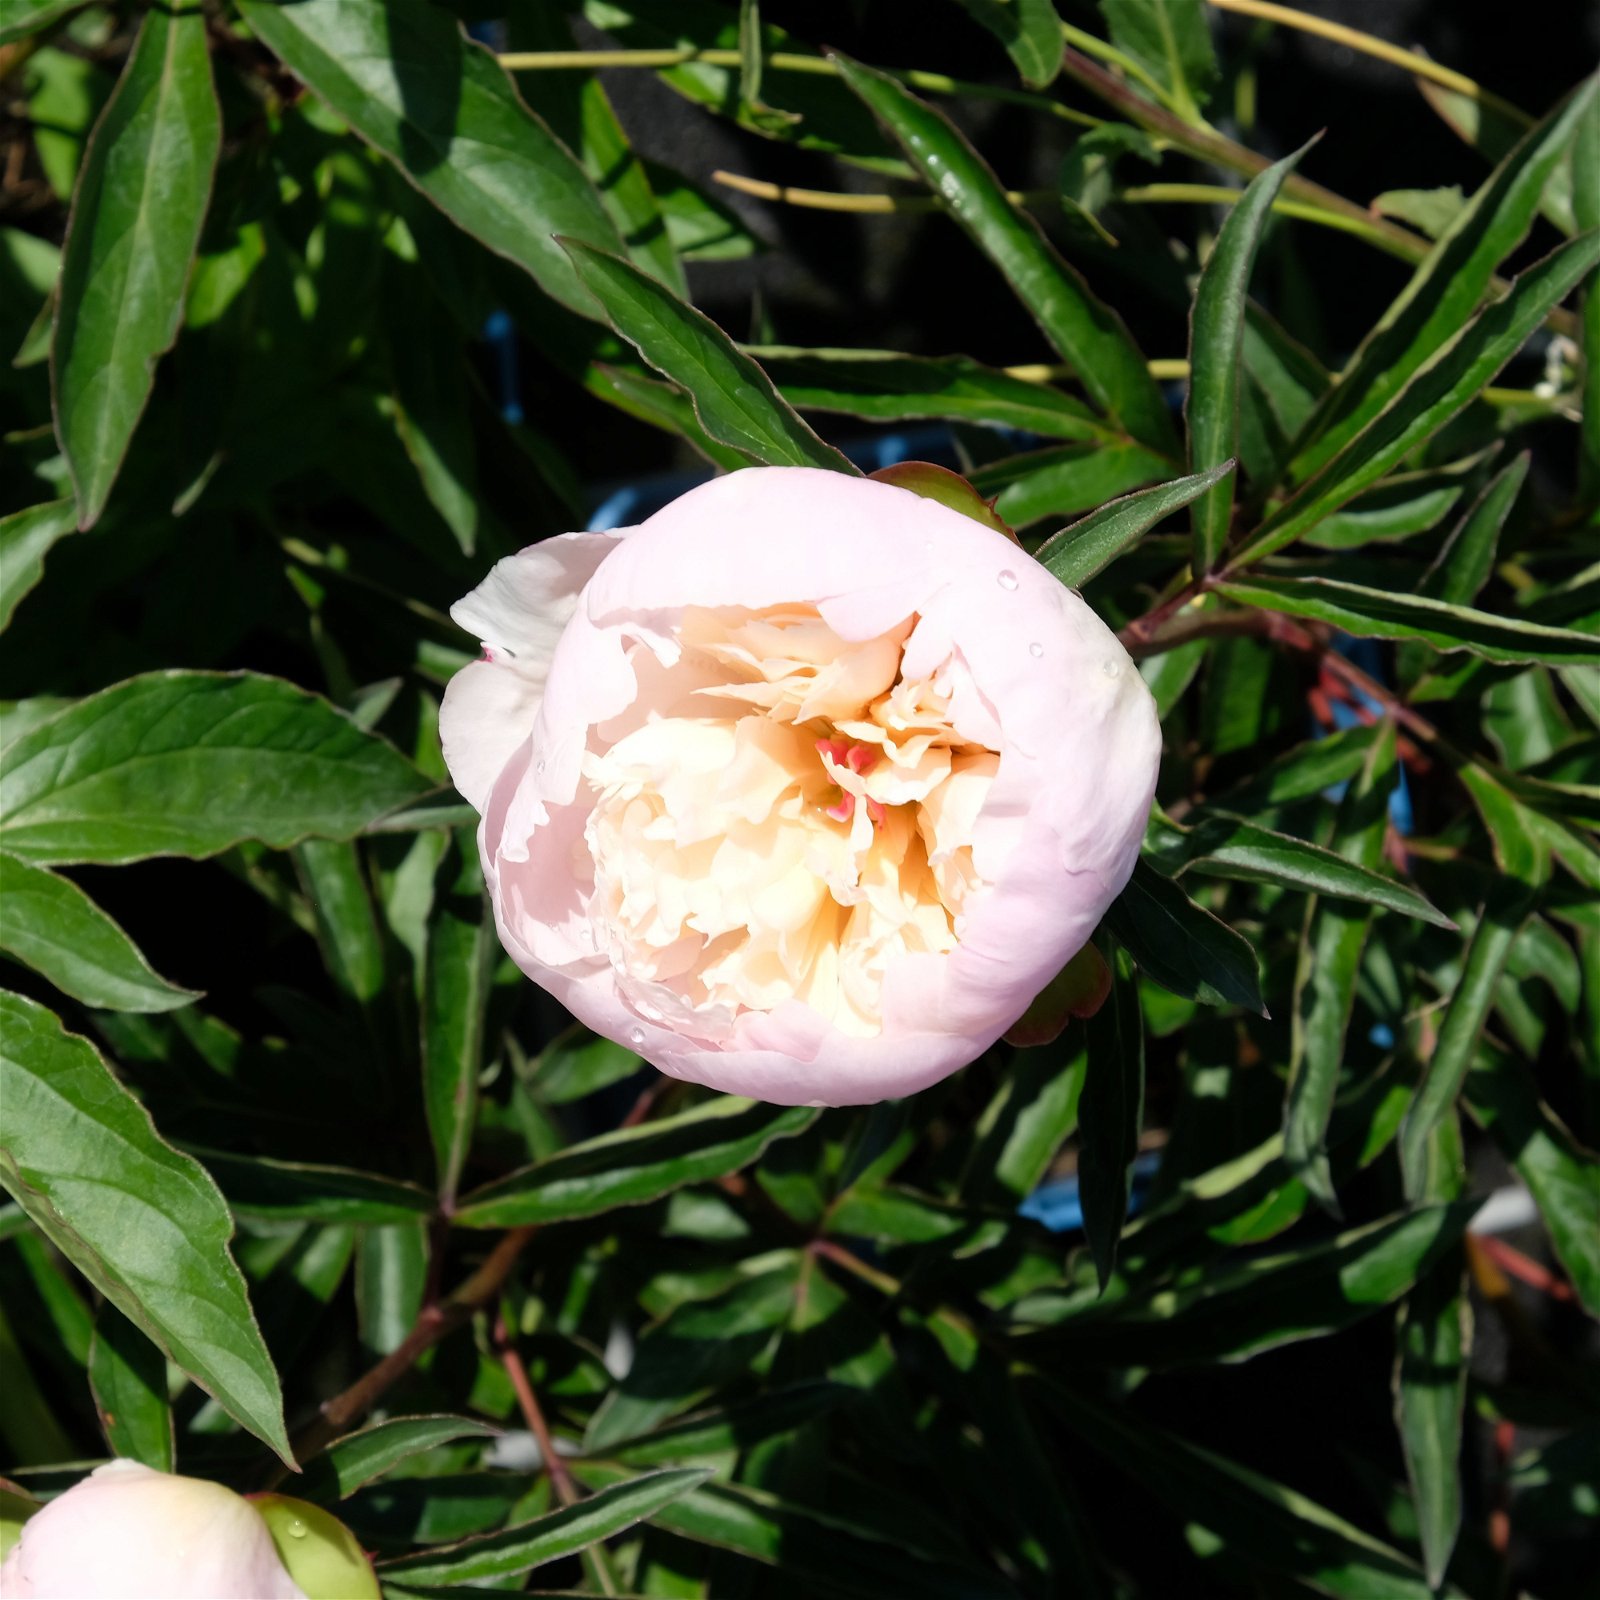 Pfingstrose, Paeonia lactiflora 'Shirley Temple', zartrosa, Topf 3 l